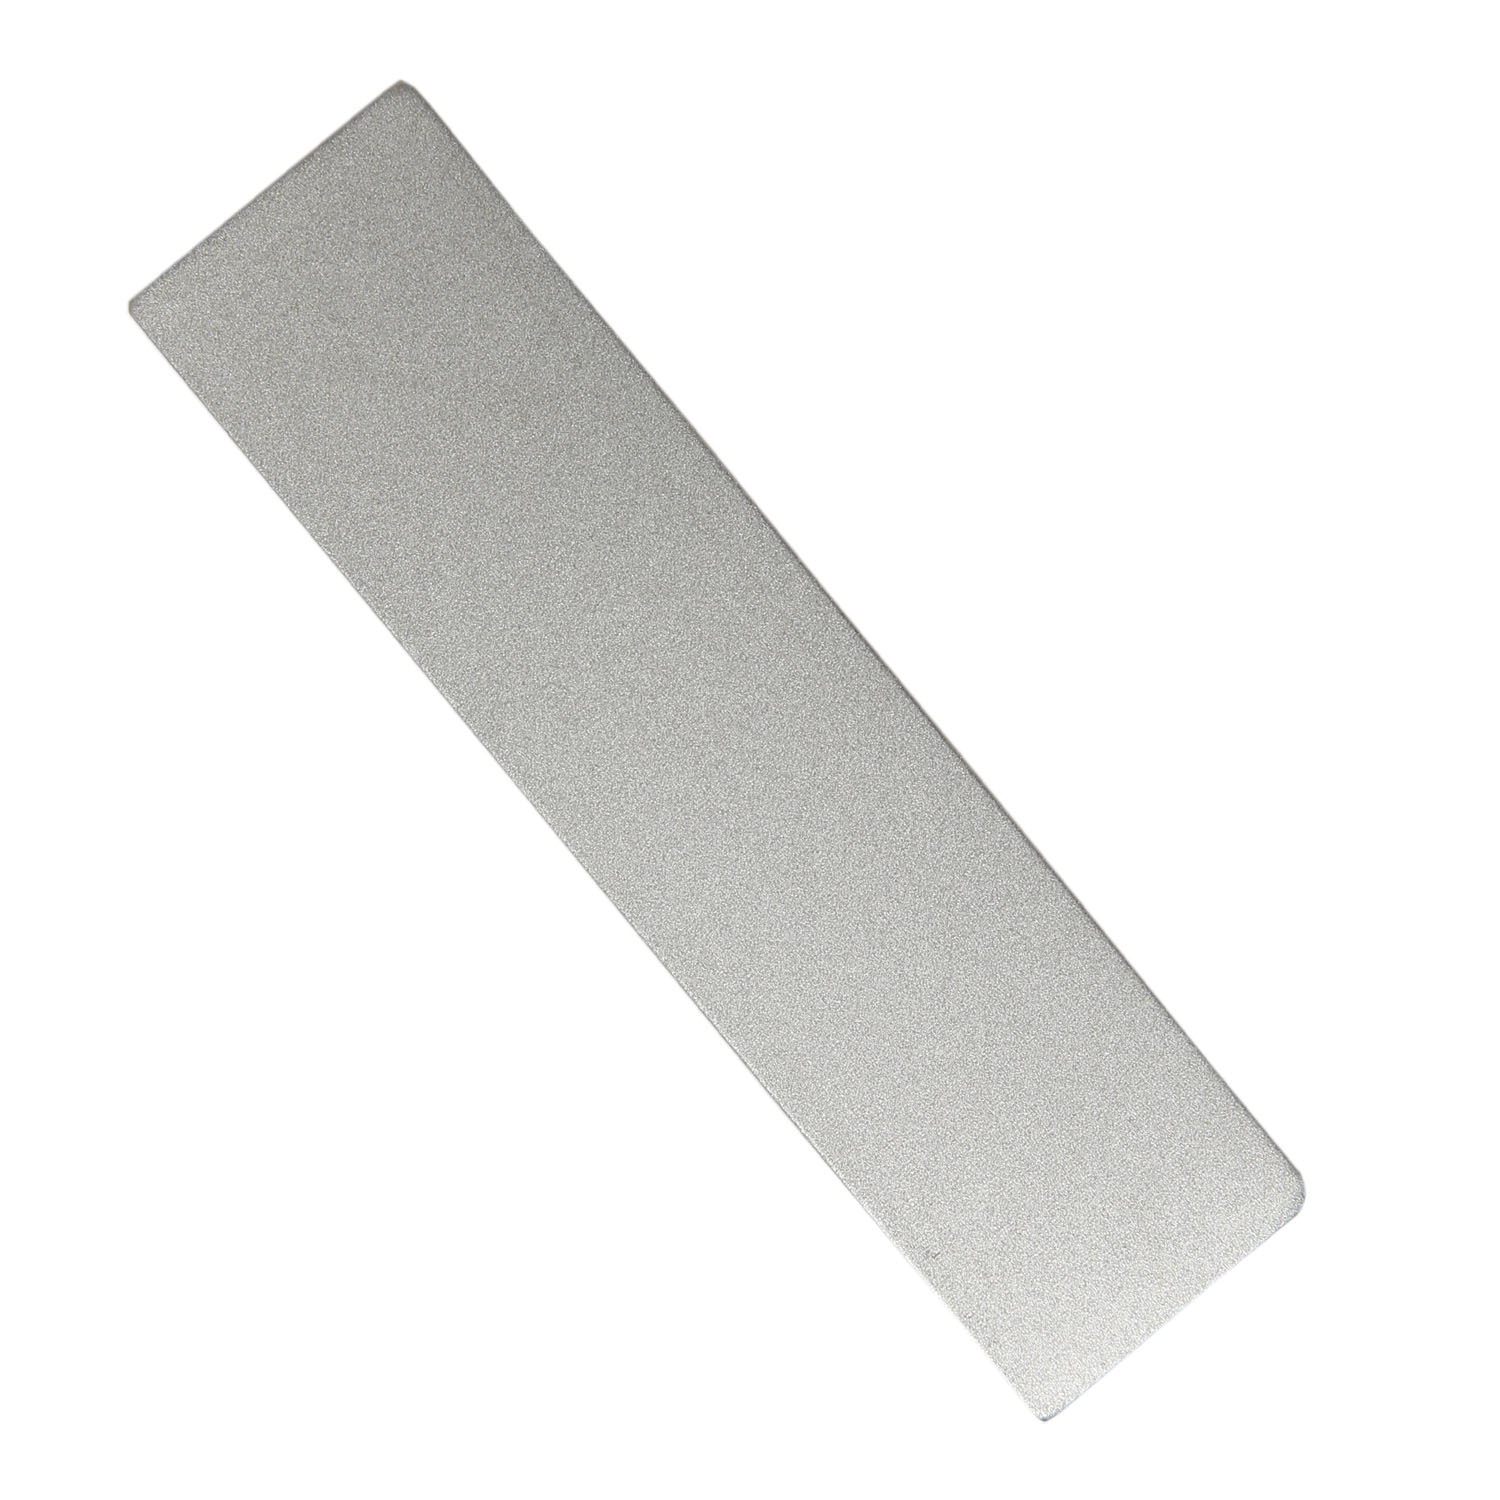 Fine Diamond Plate - Guided Field Sharpener